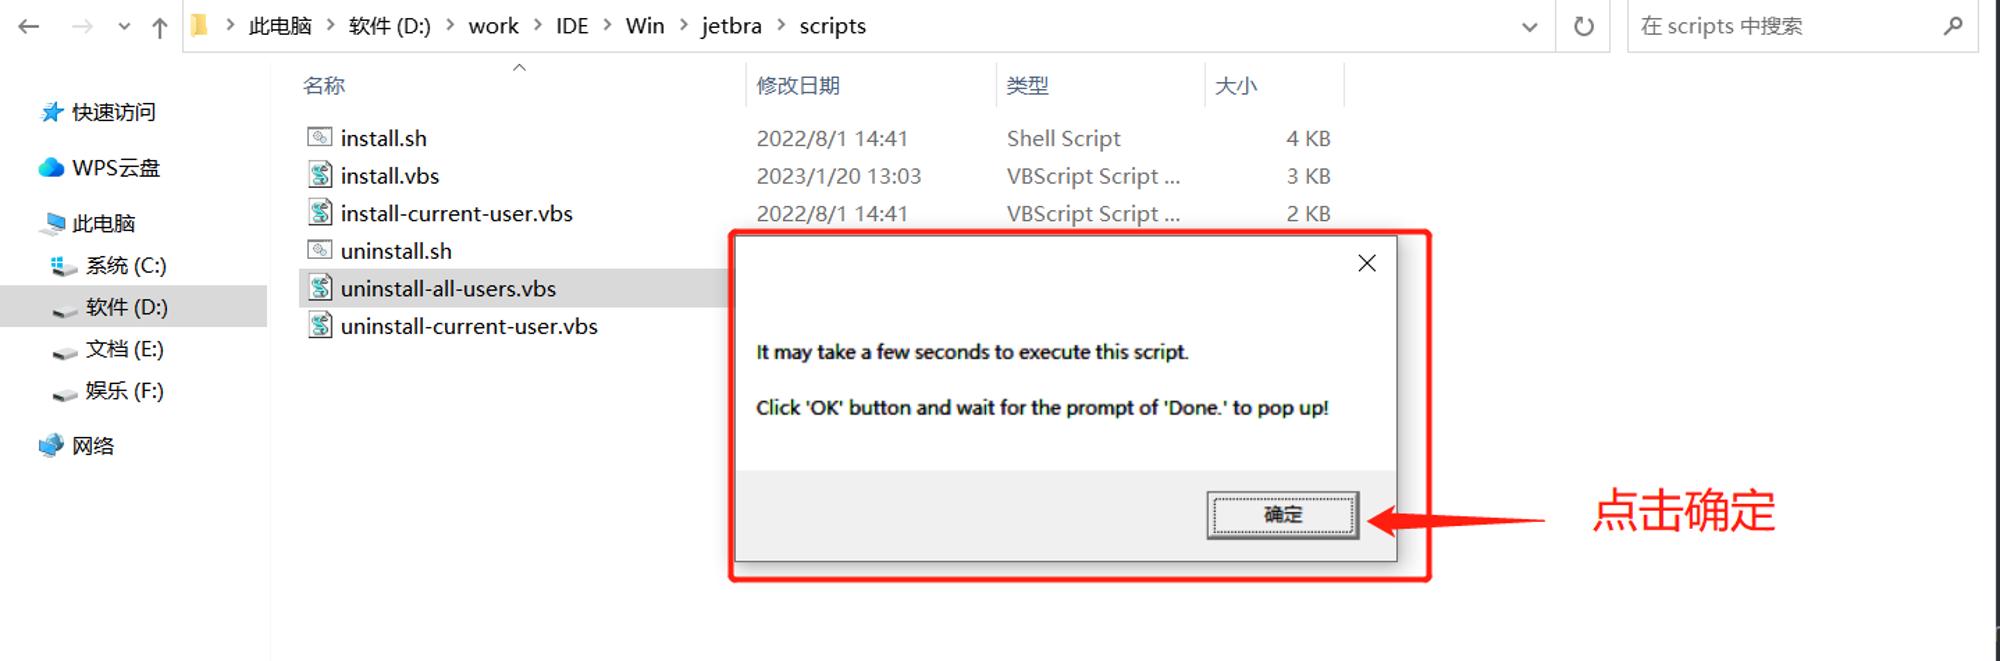 JetBrains DataSpell 2023.1.3 for windows instal free